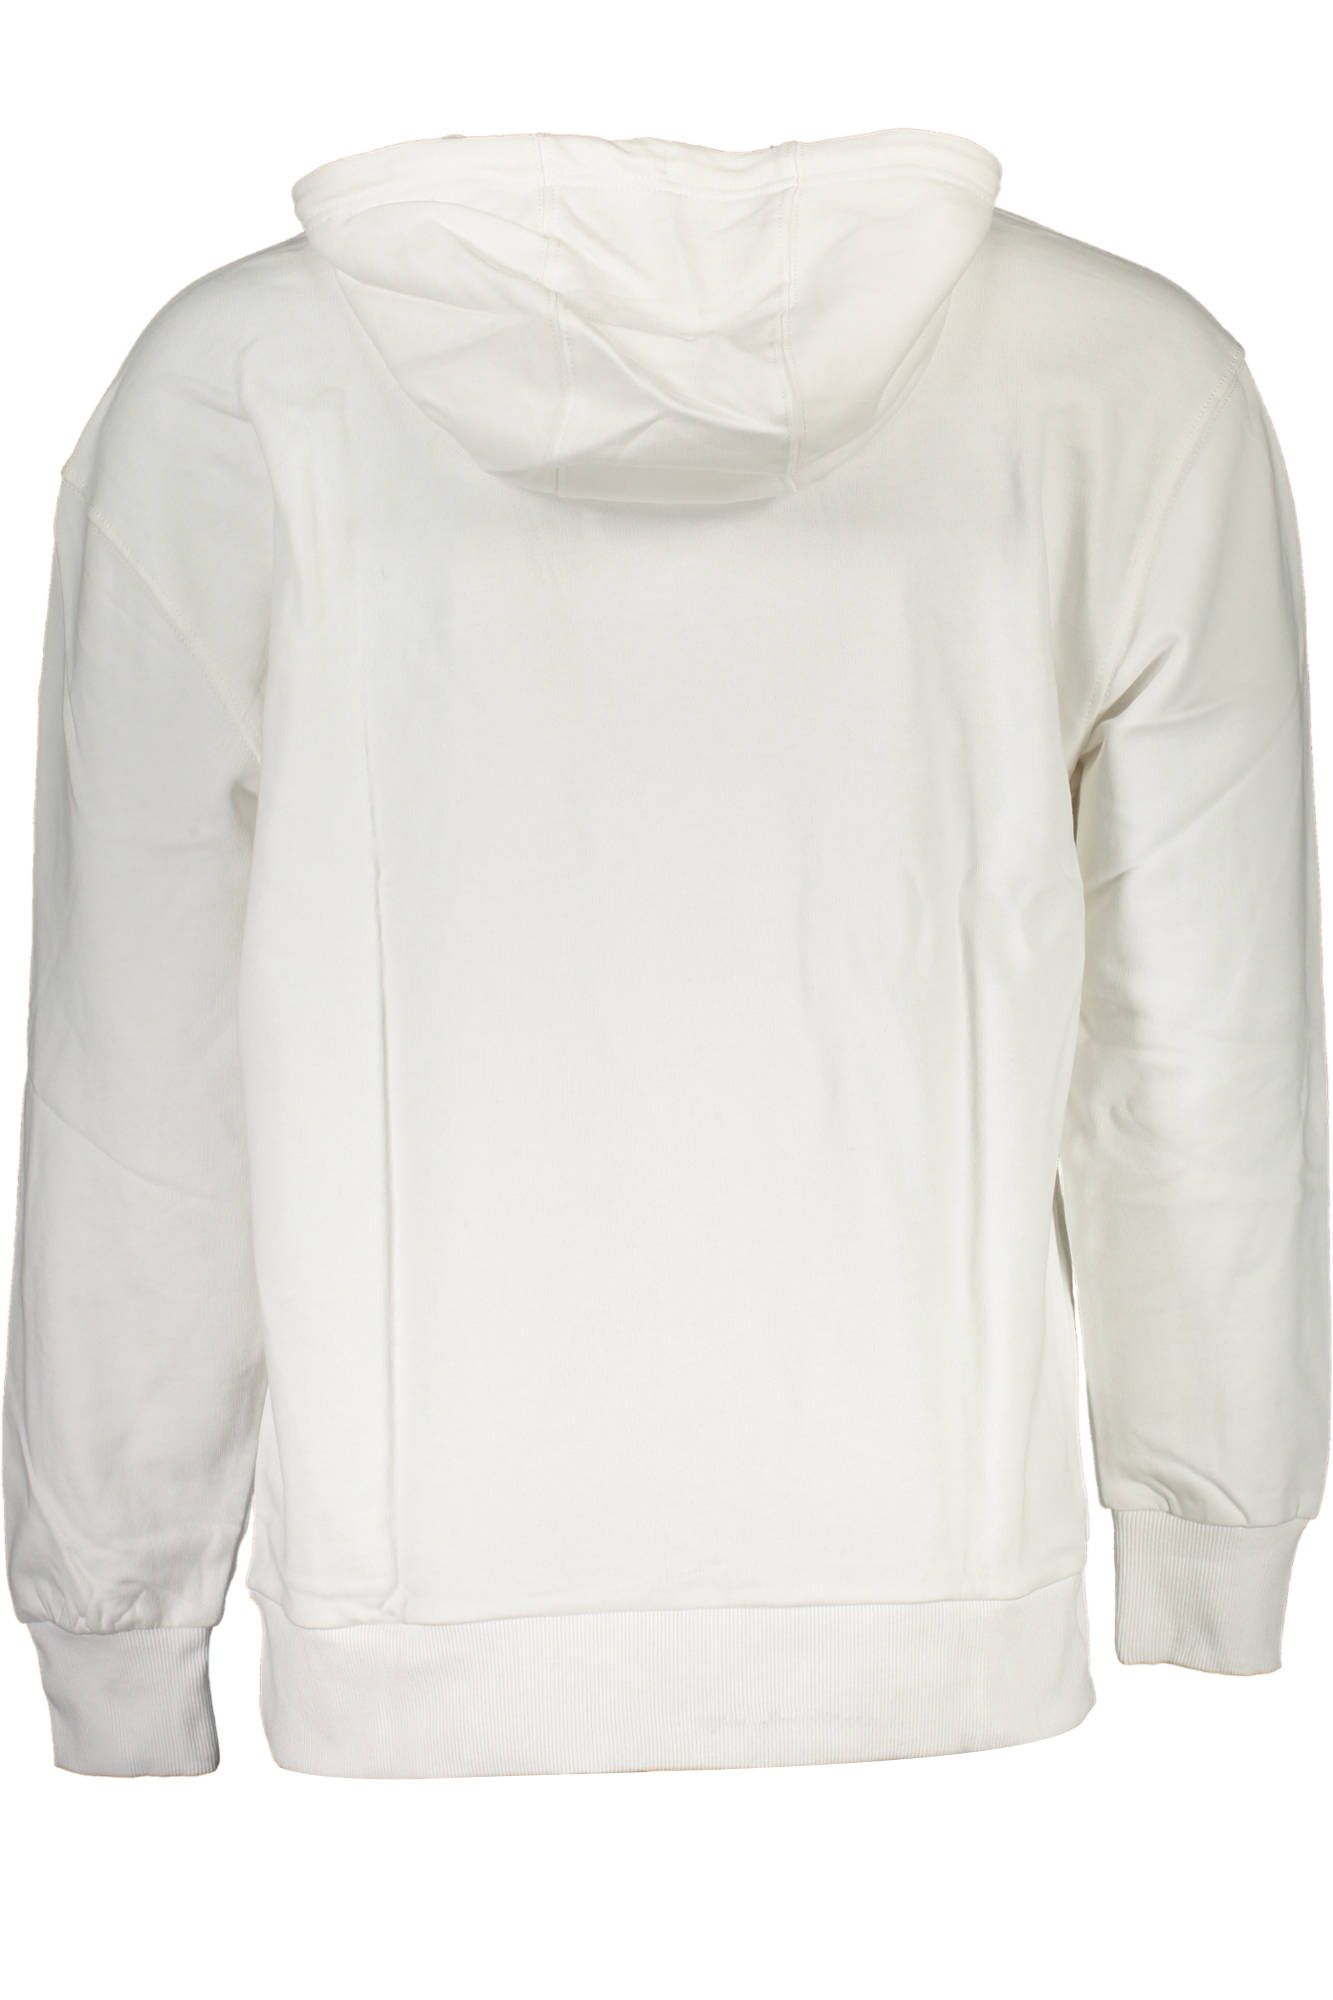 Tommy Hilfiger White Cotton Sweater